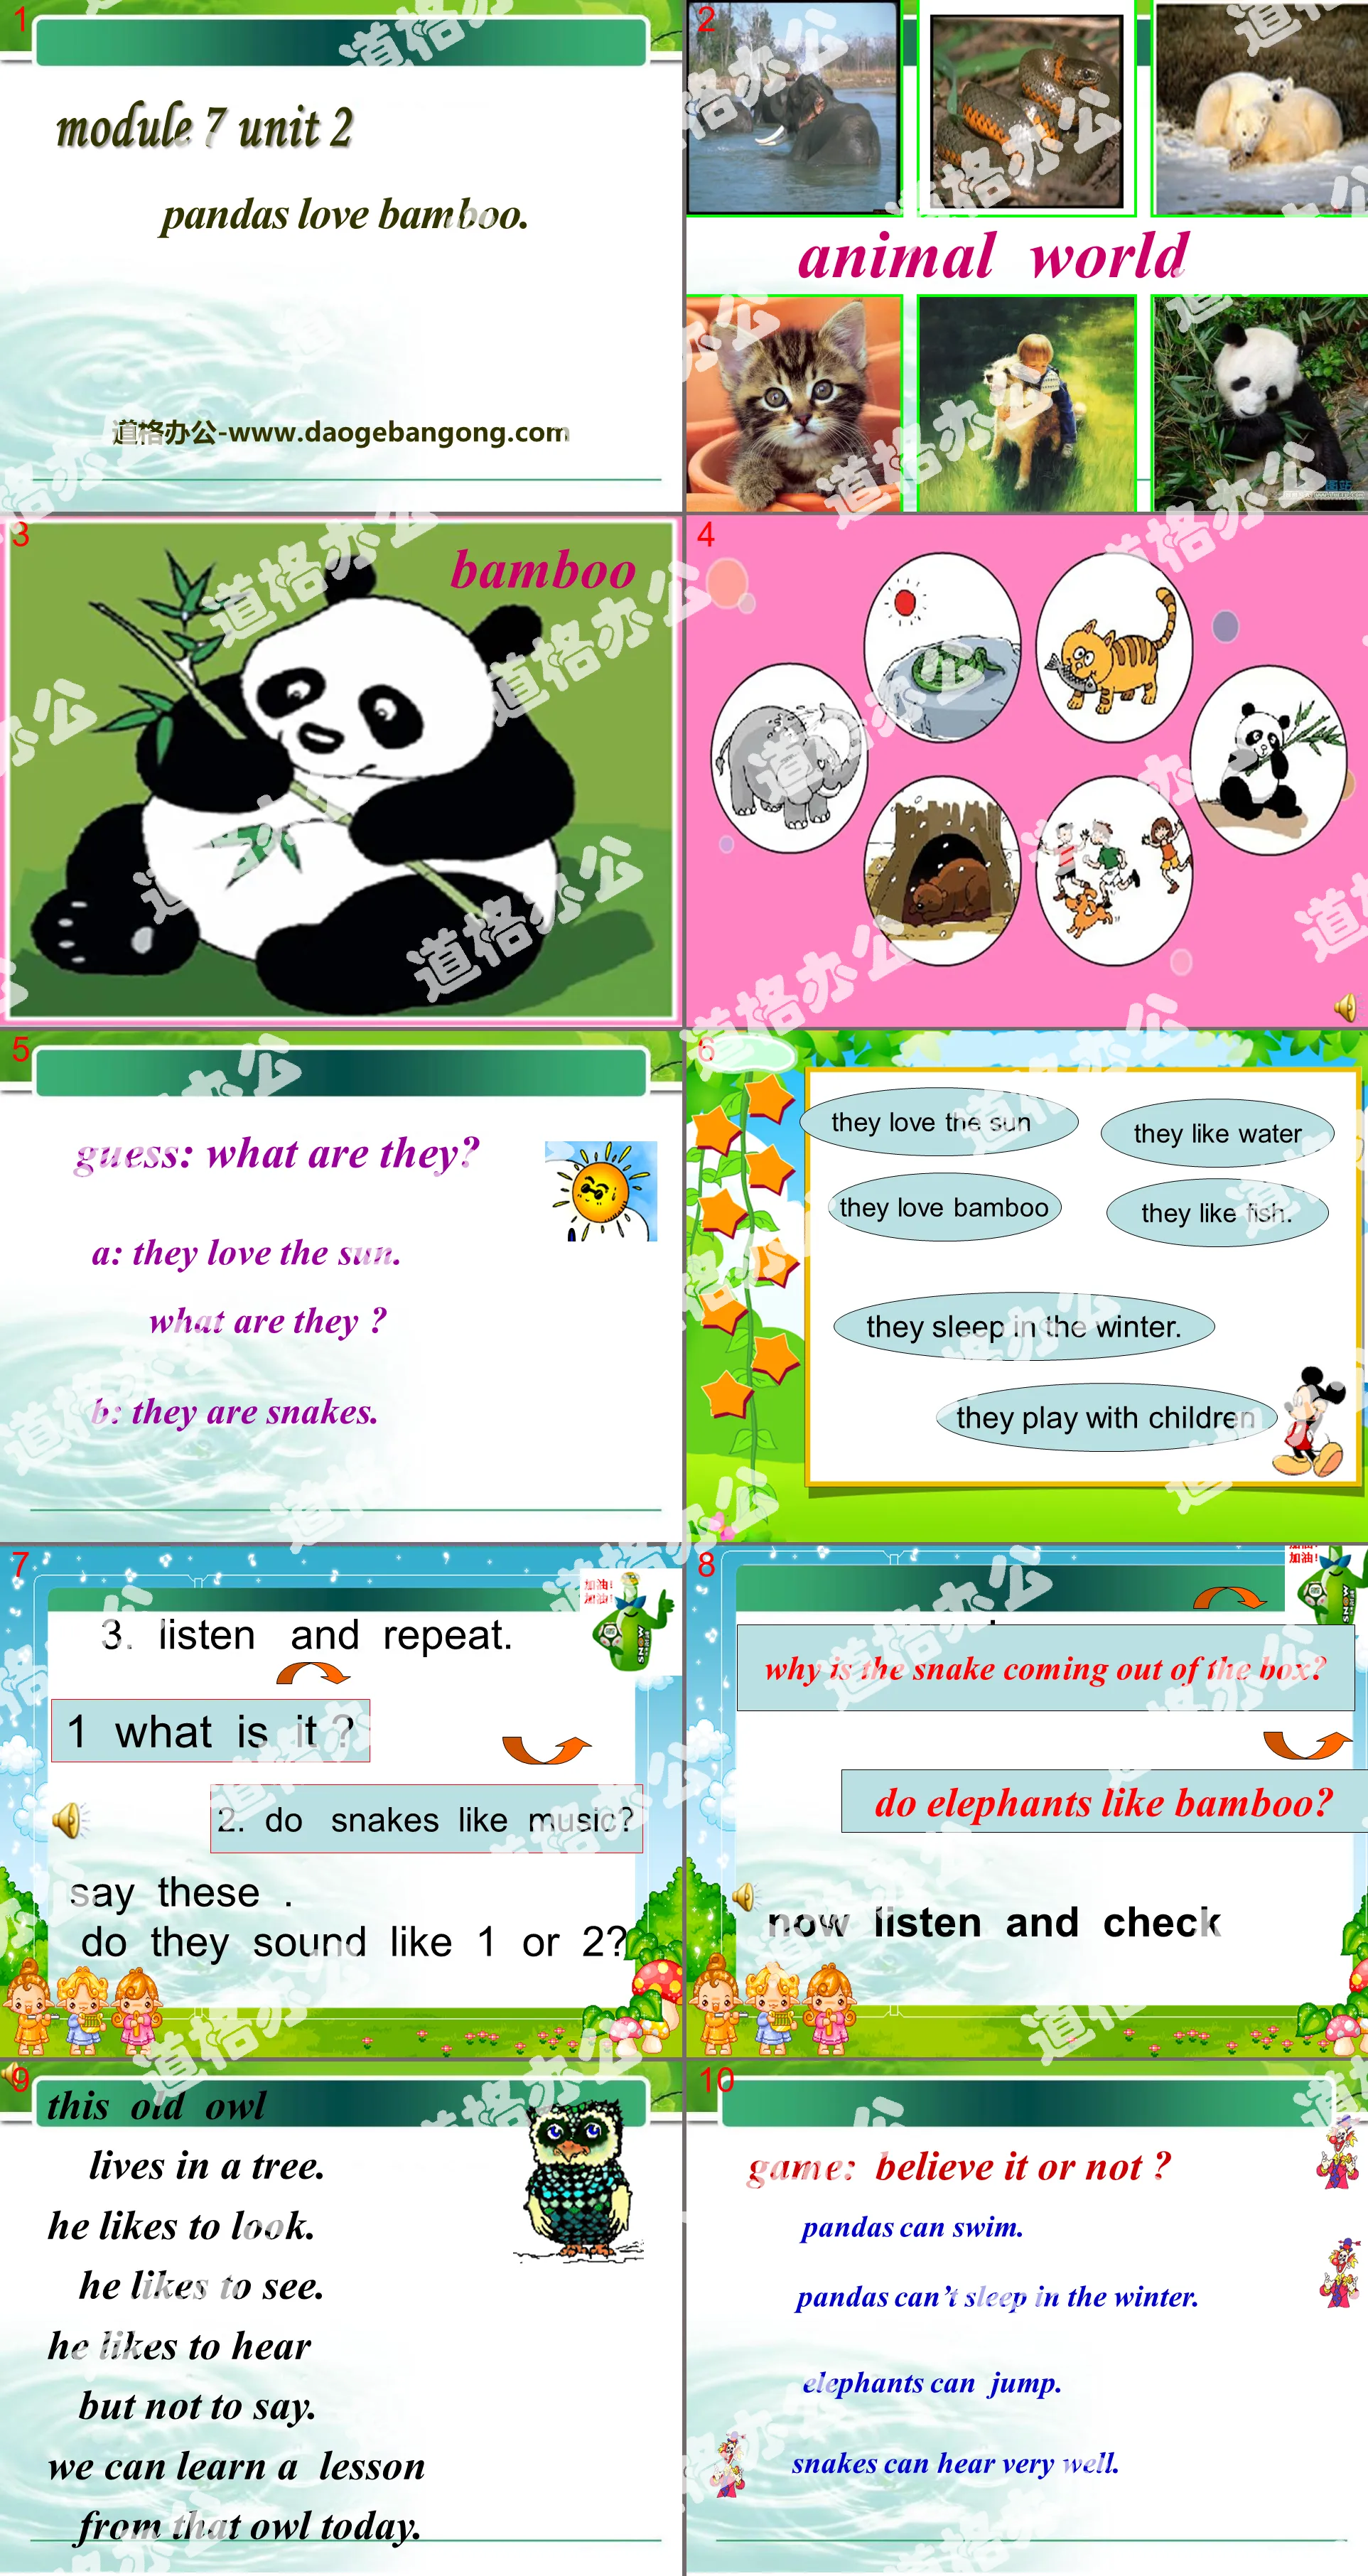 《Pandas love bamboo》PPT课件2
